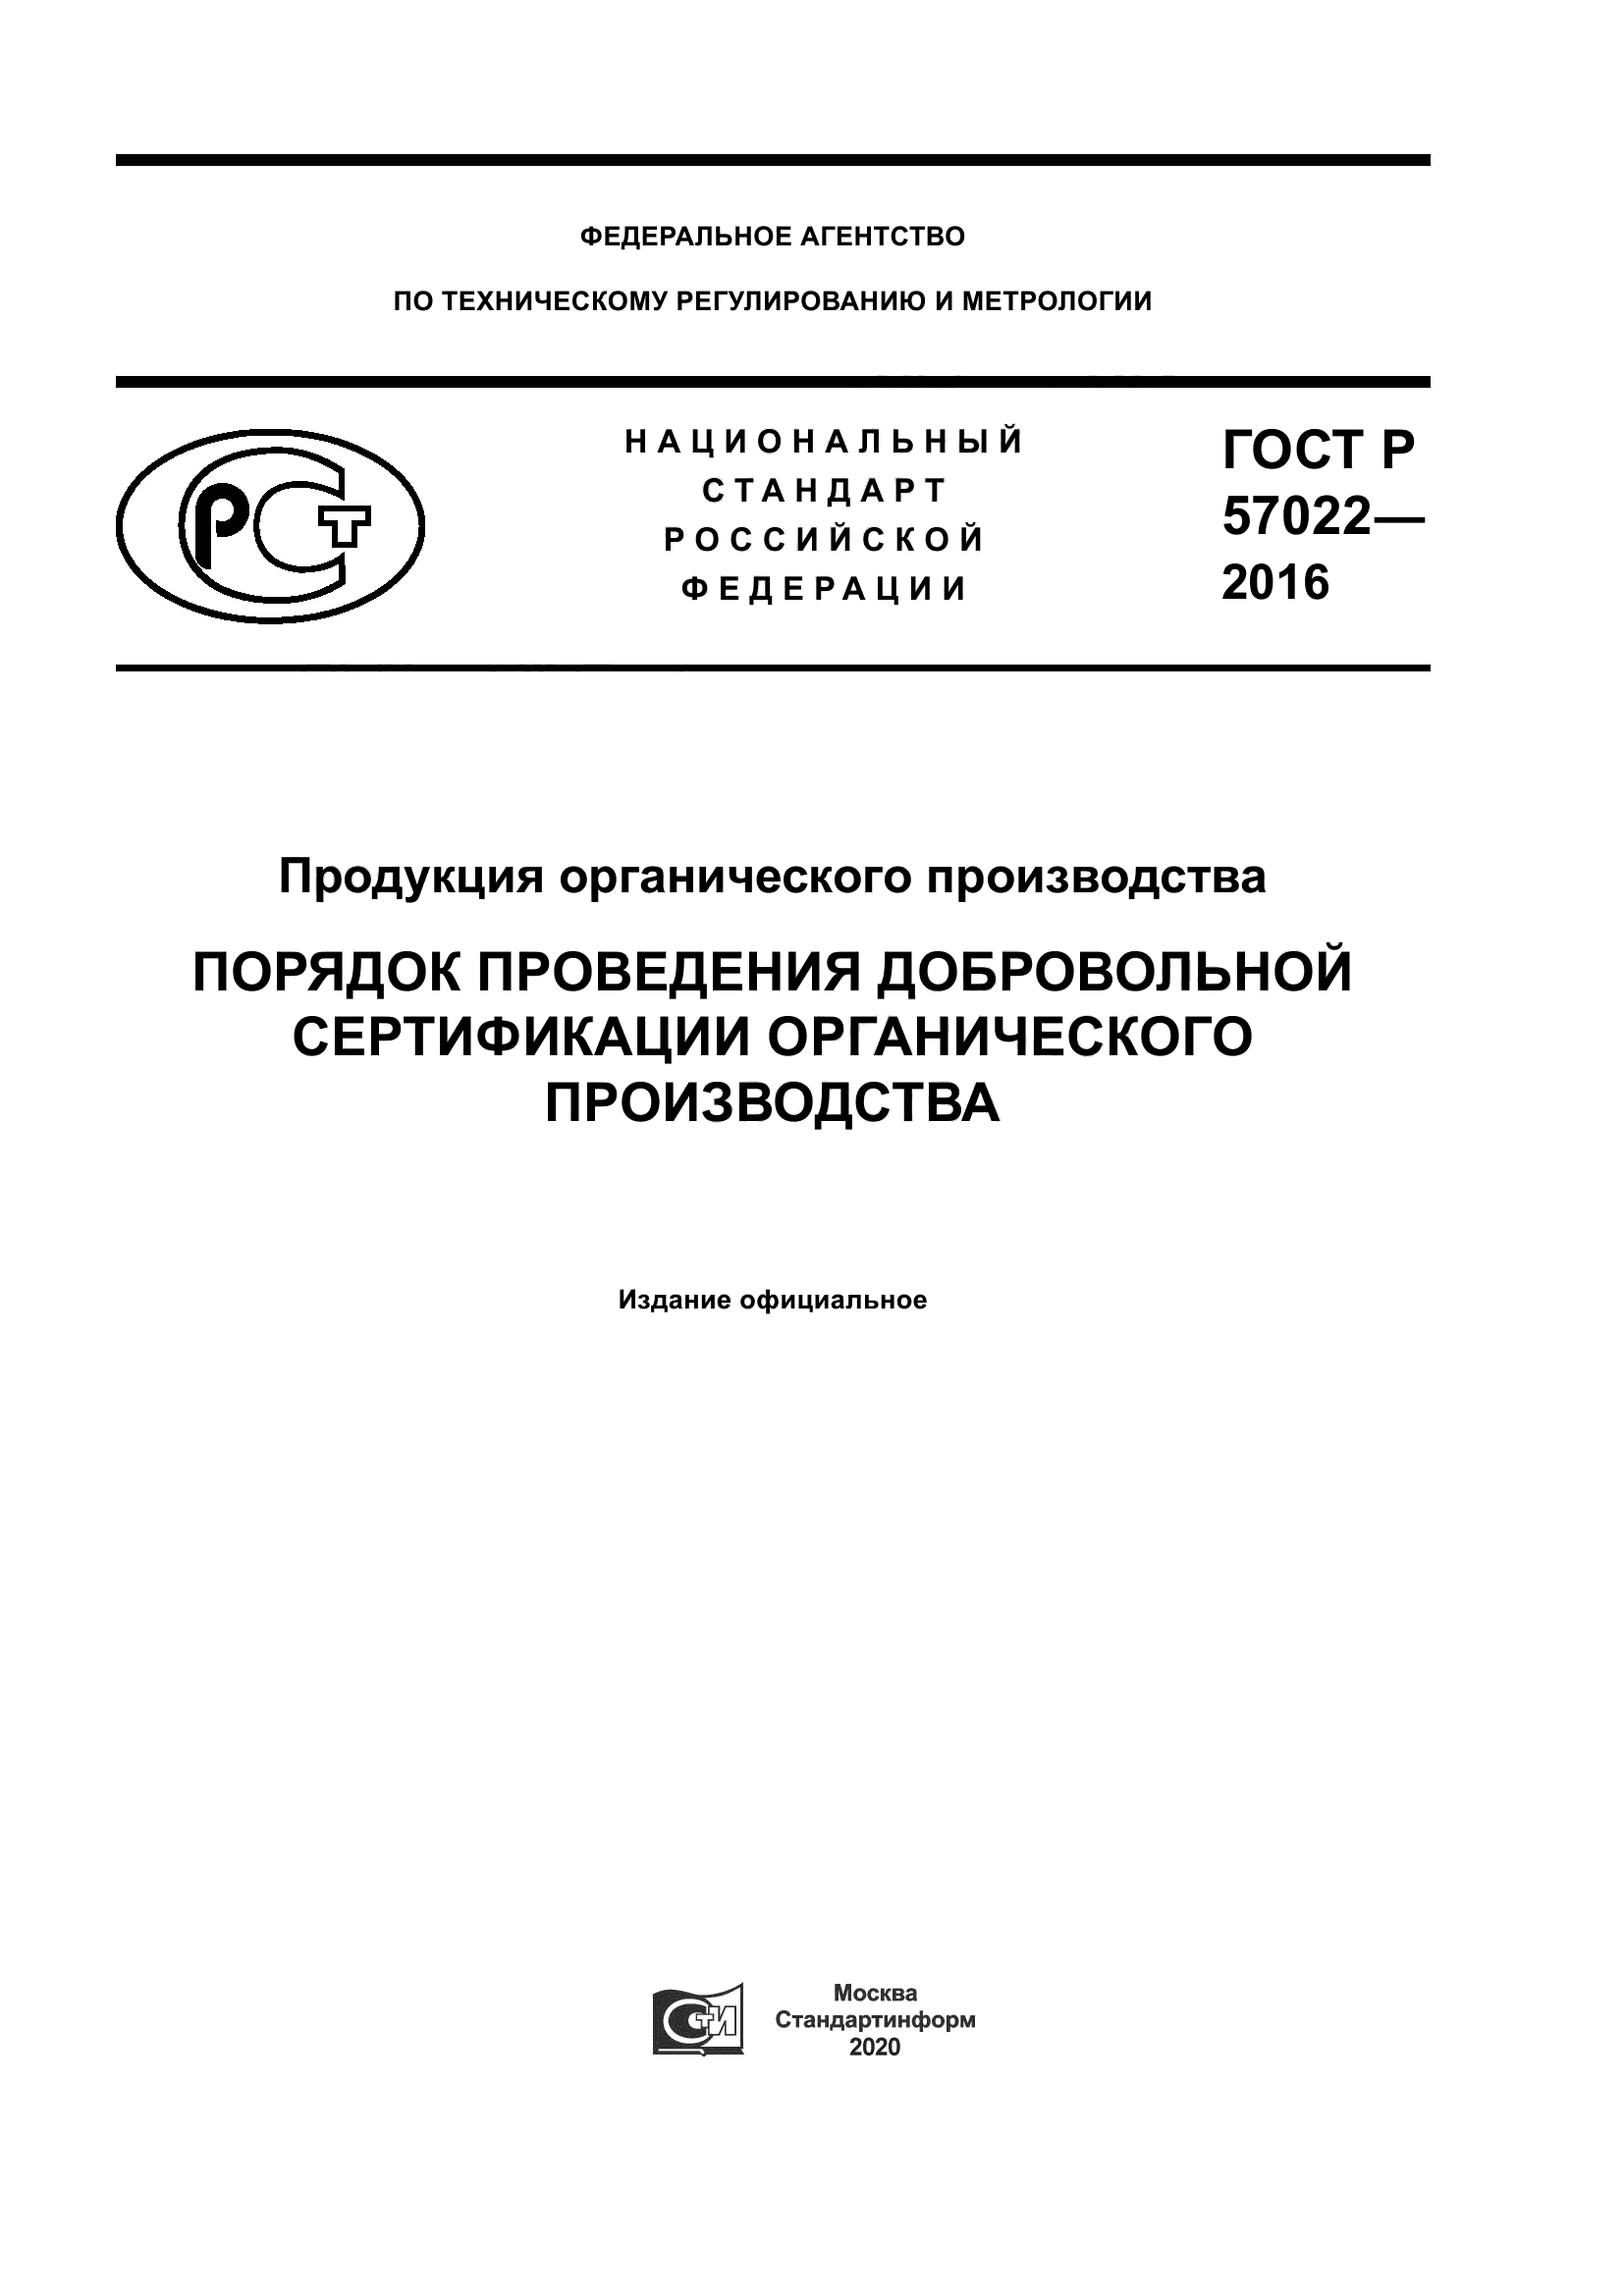 ГОСТ Р 57022-2016